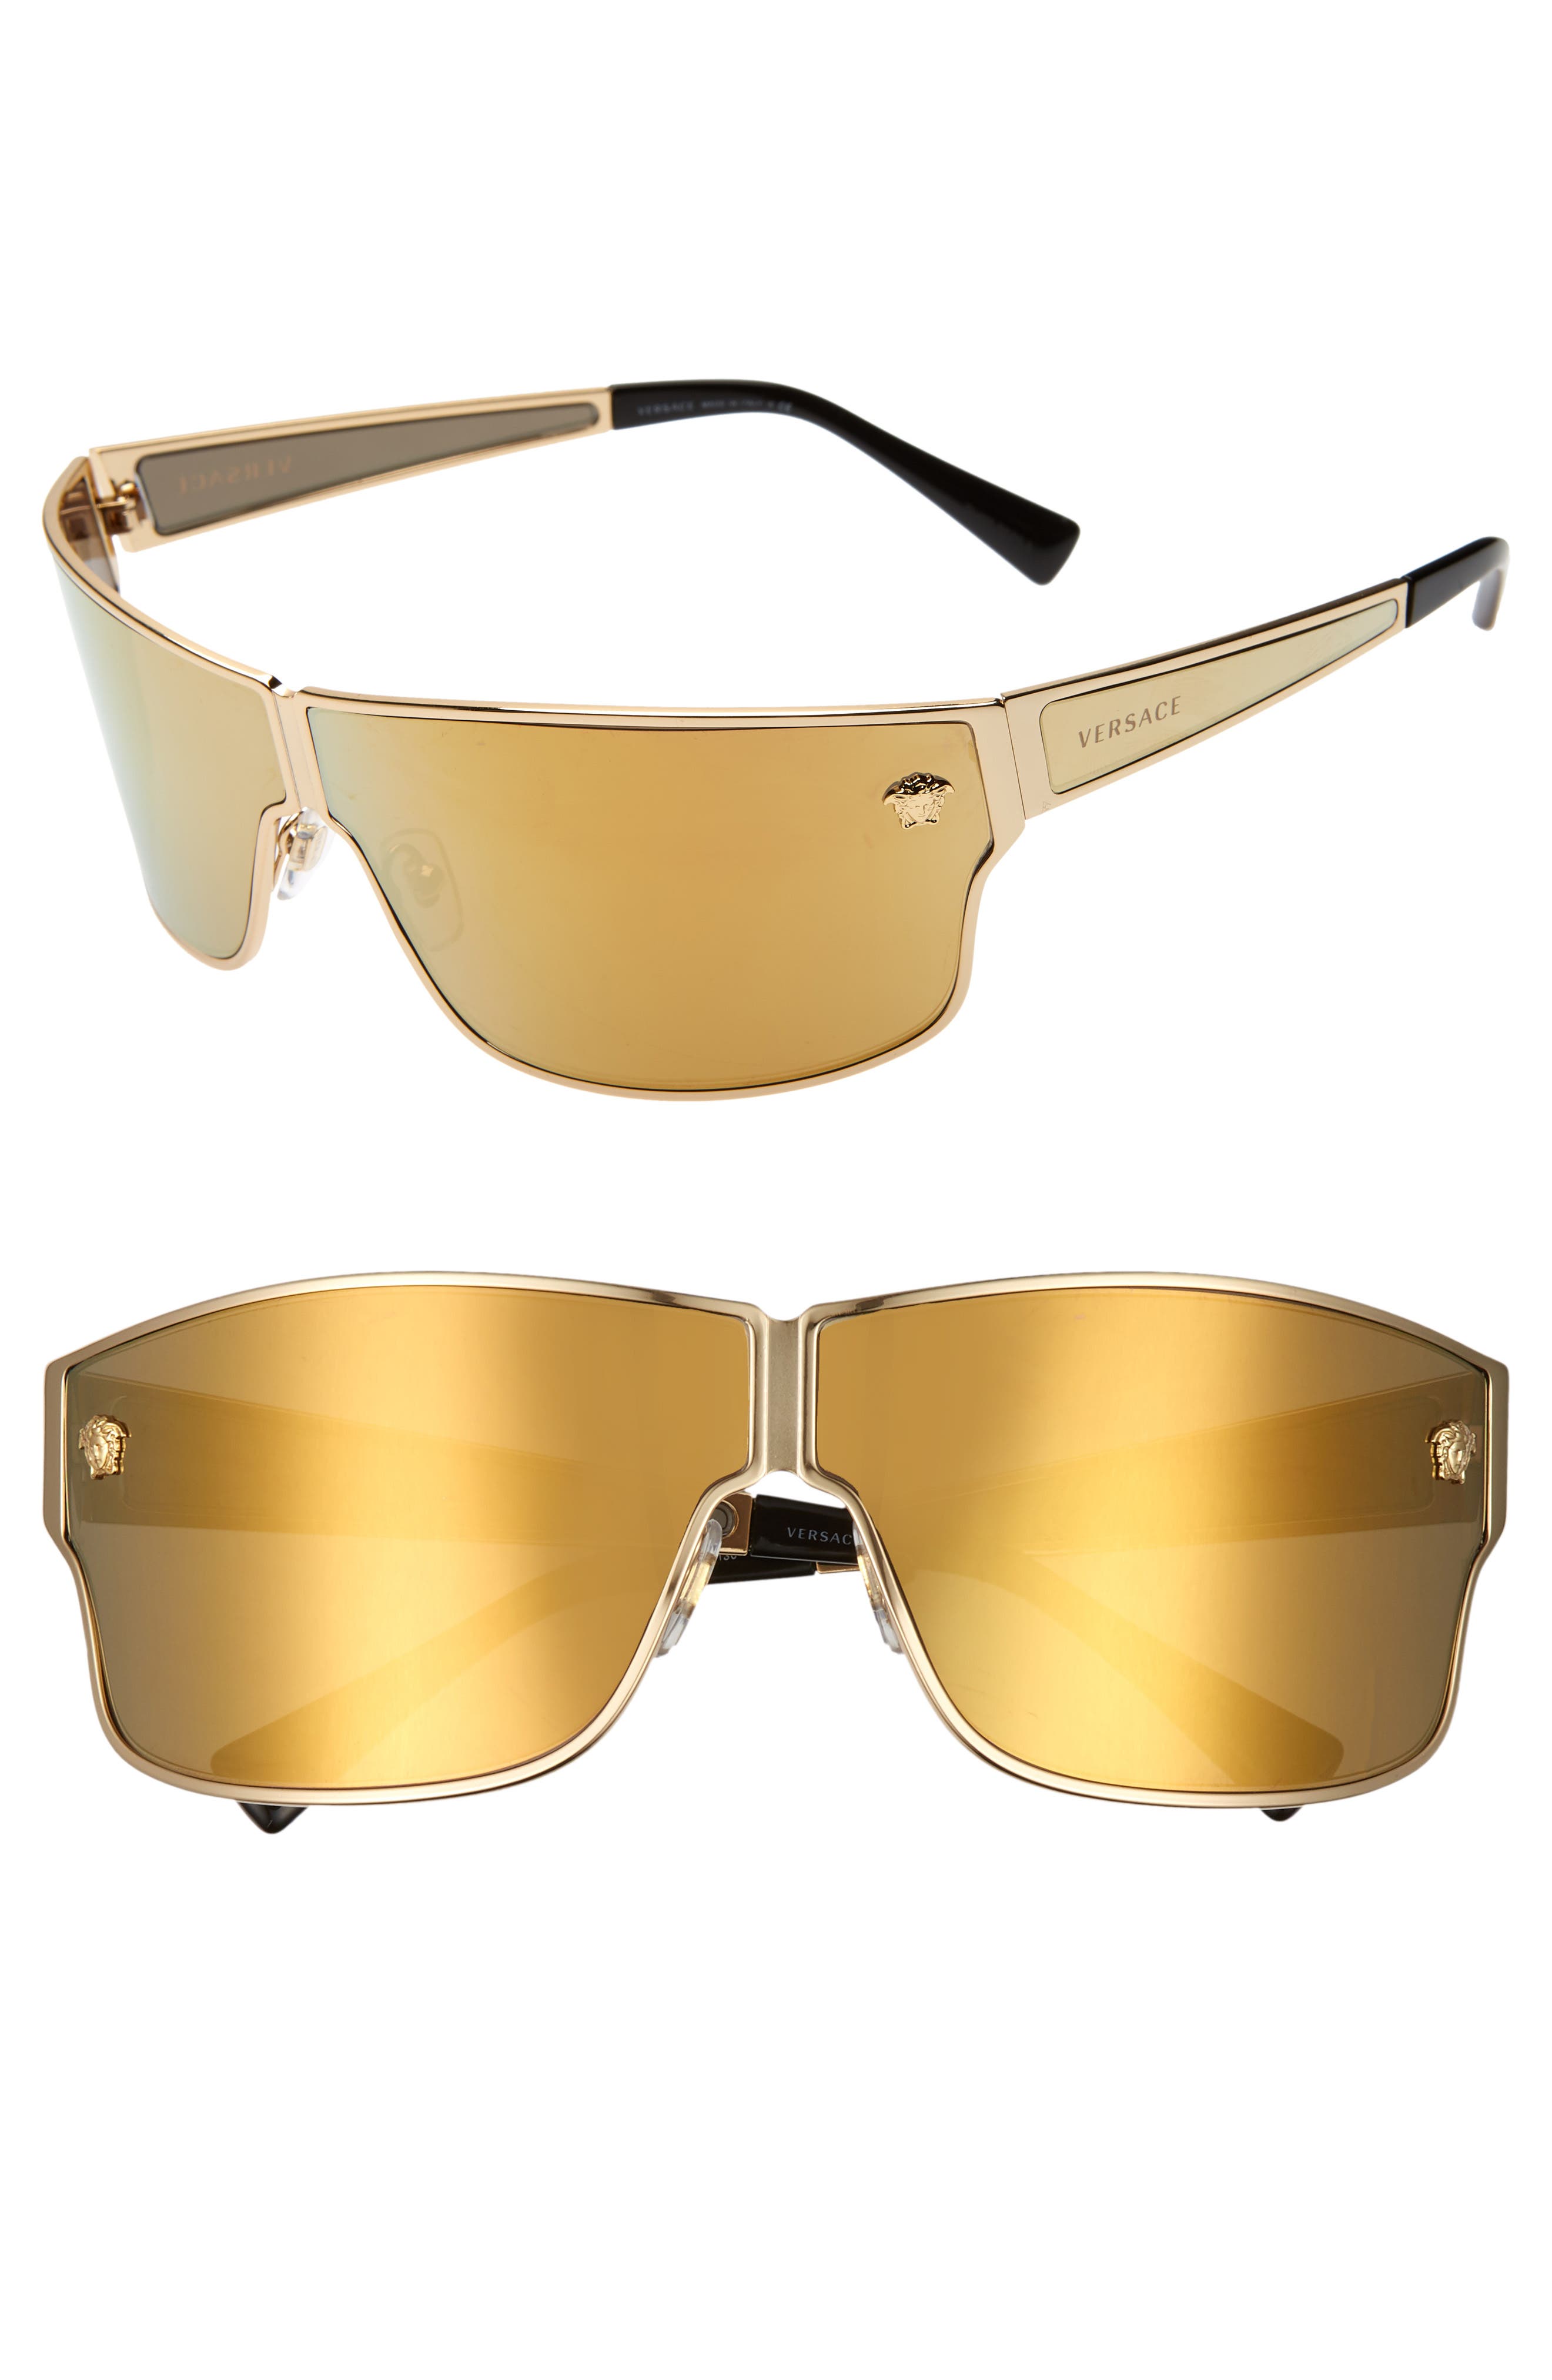 versace gold shield sunglasses